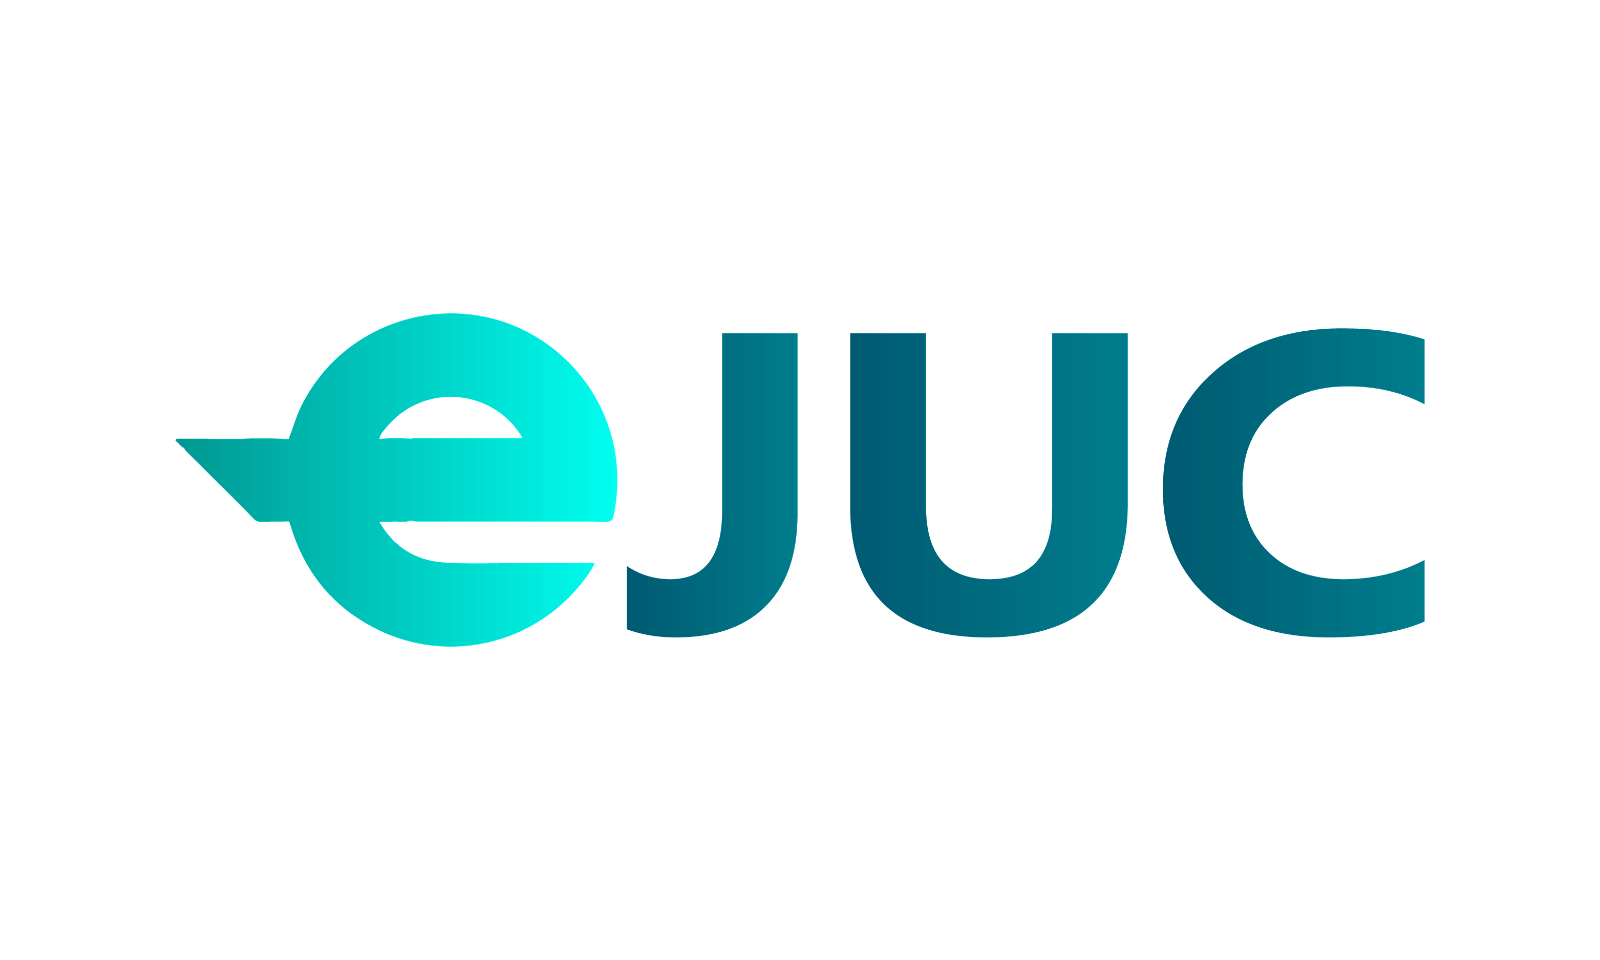 Ejuc.com - Creative brandable domain for sale